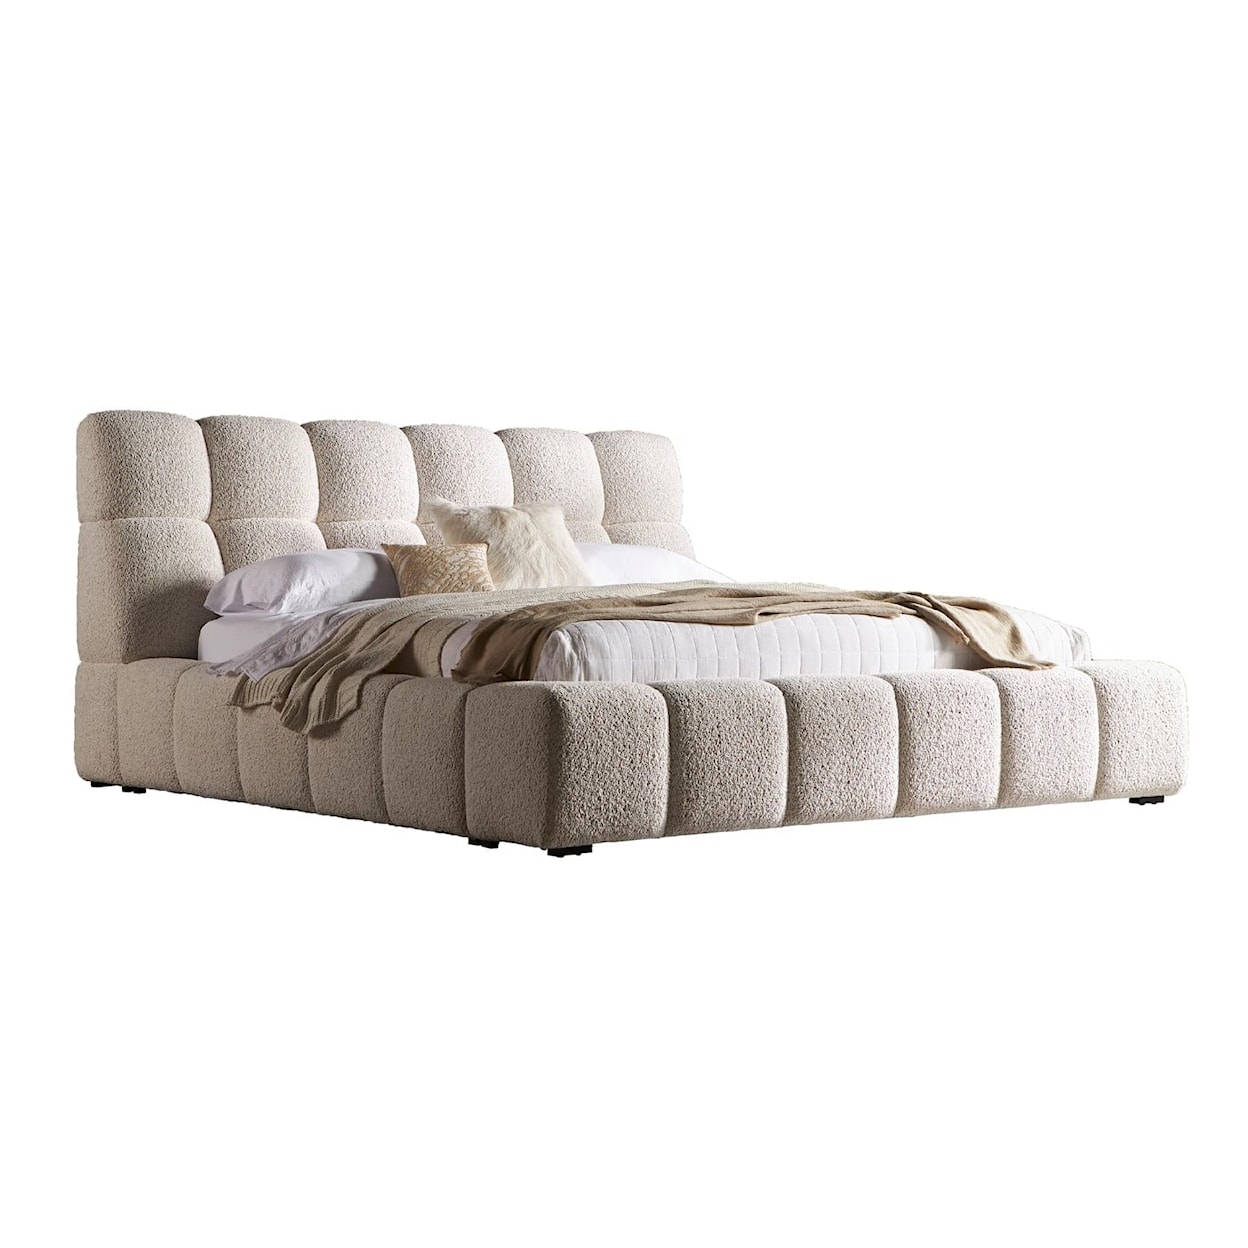 Parker Living Escape Queen Upholstered Panel Bed